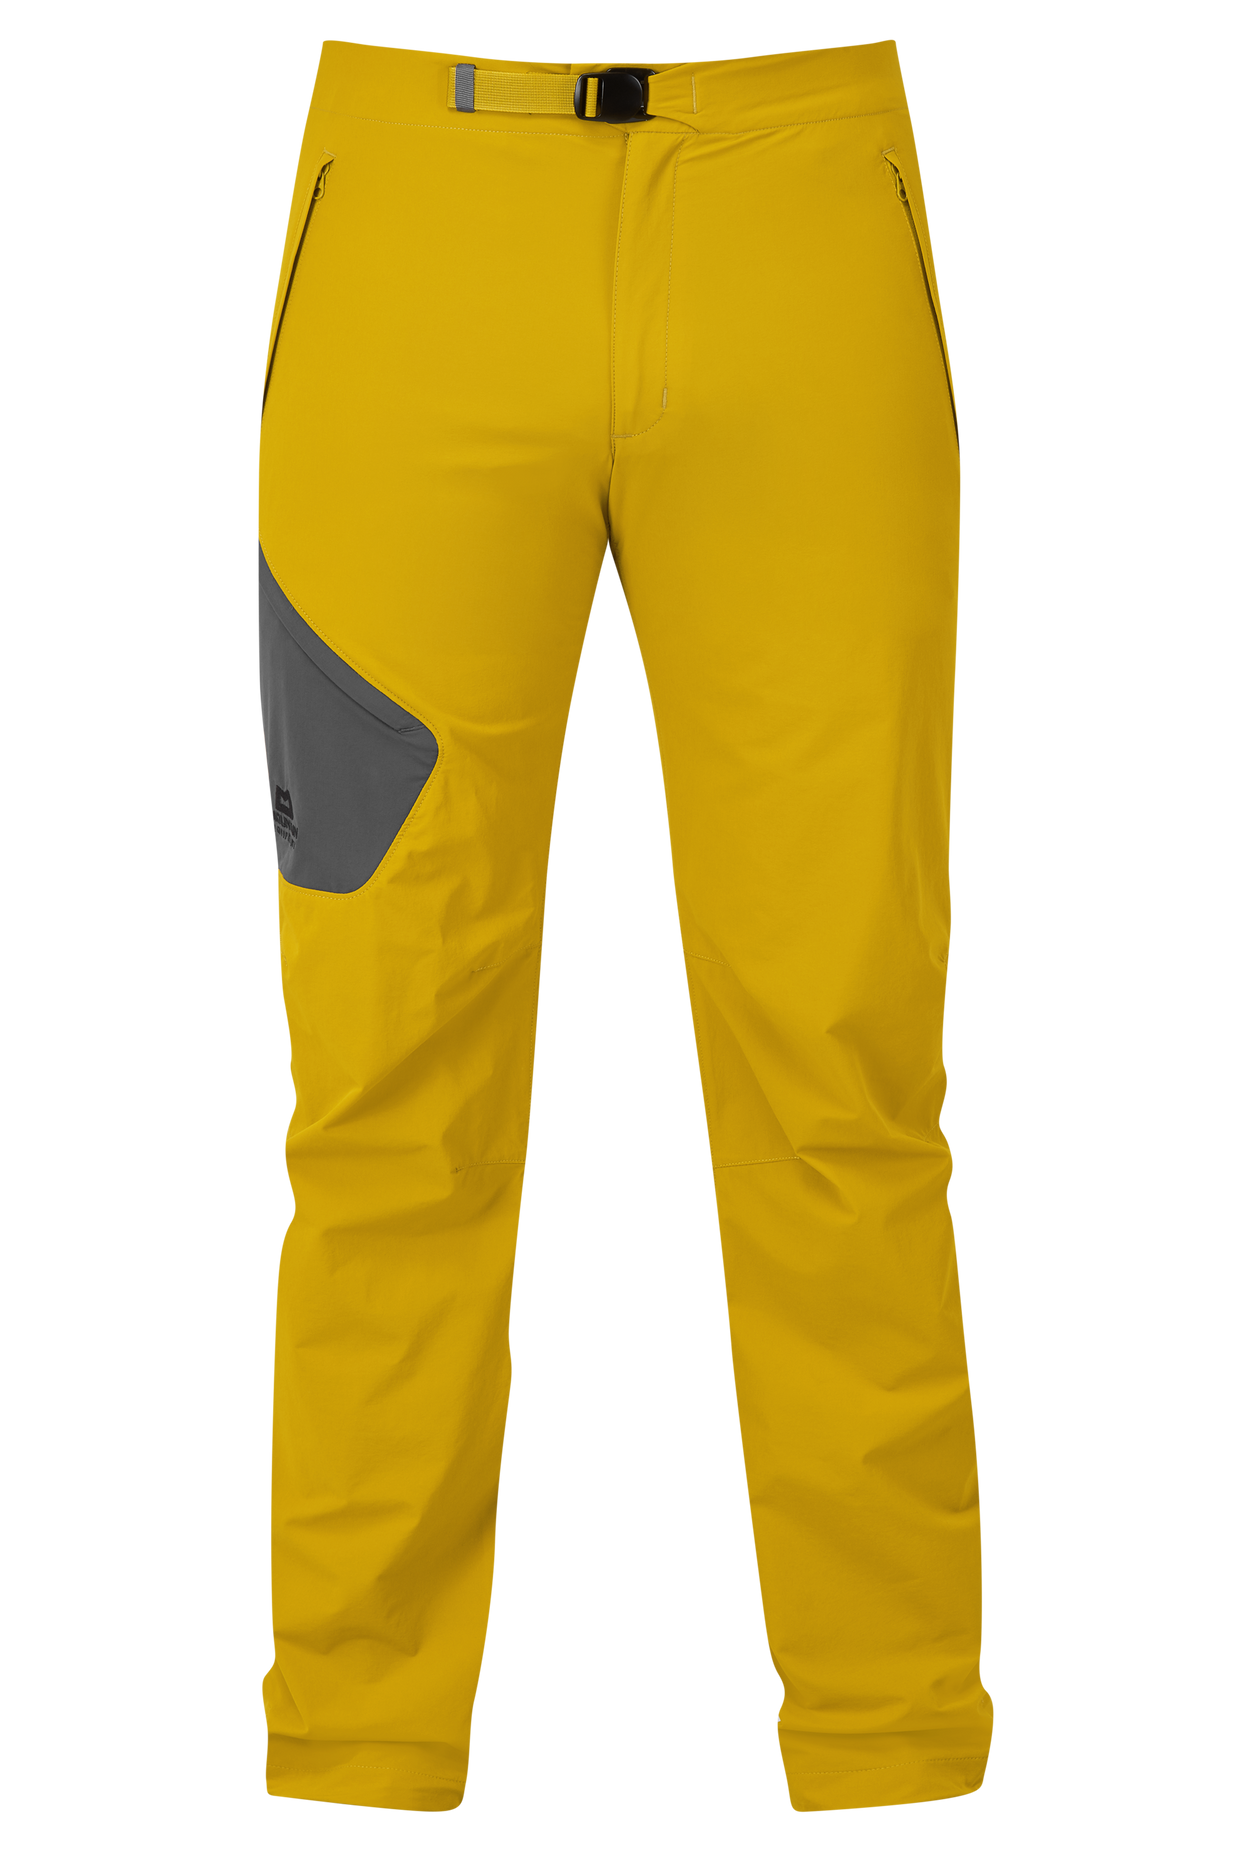 Mountain Equipment pánské softshellové kalhoty Comici Pant Barva: Acid/Ombre, Velikost: 36/XL